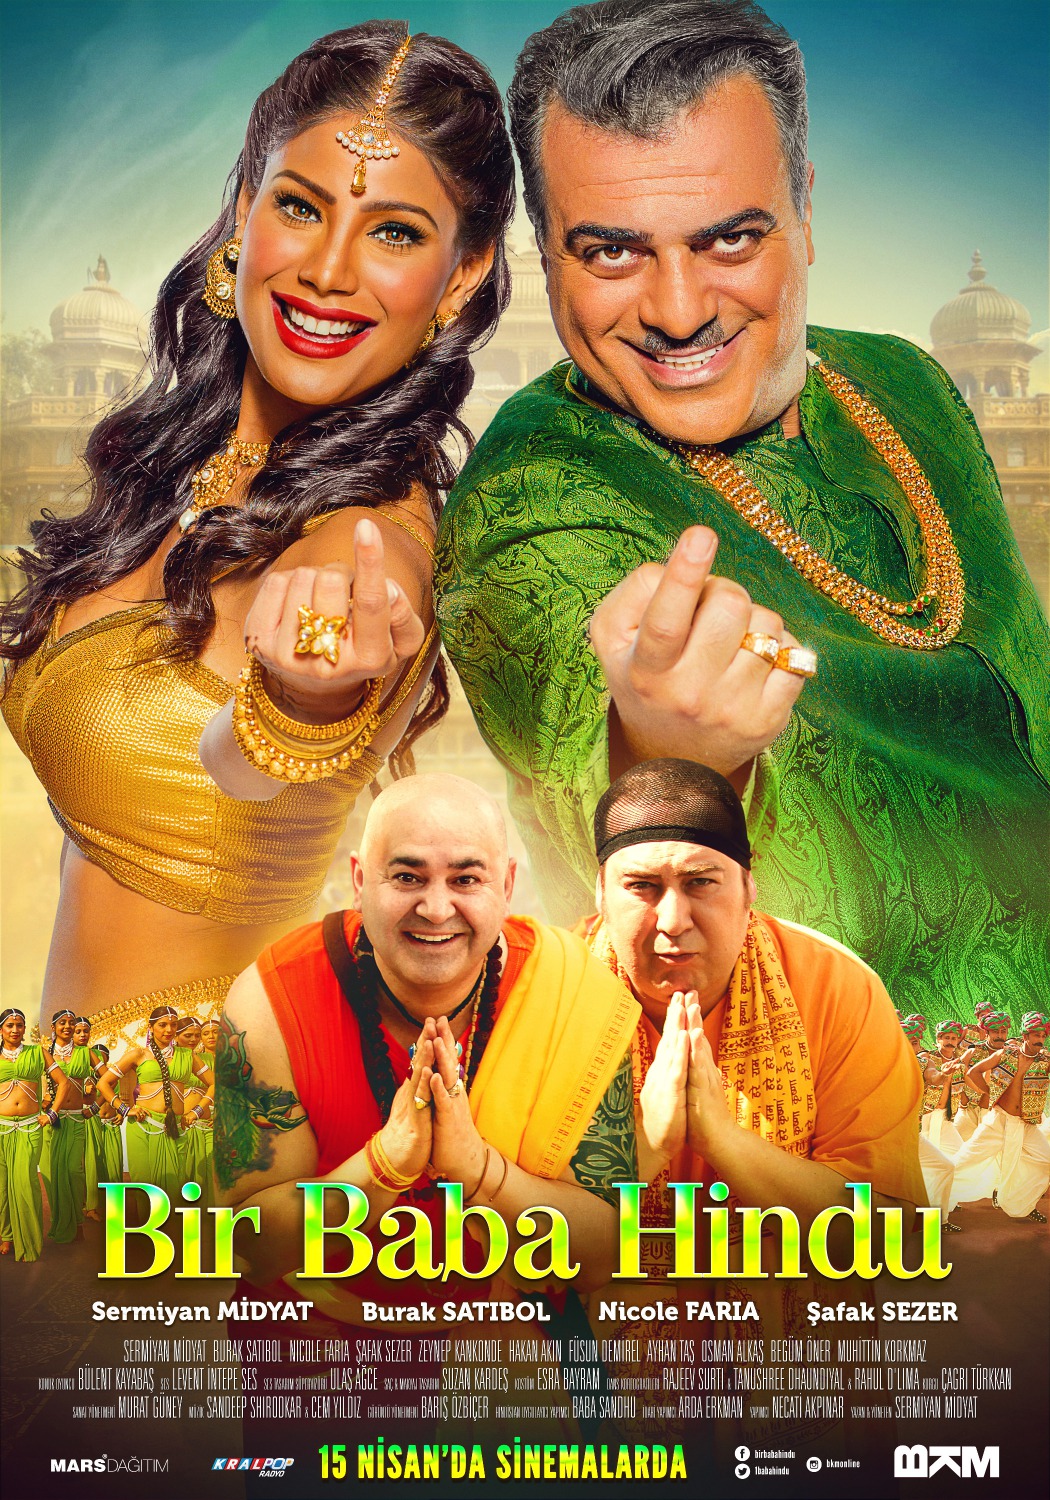 Extra Large Movie Poster Image for Bir Baba Hindu (#2 of 2)